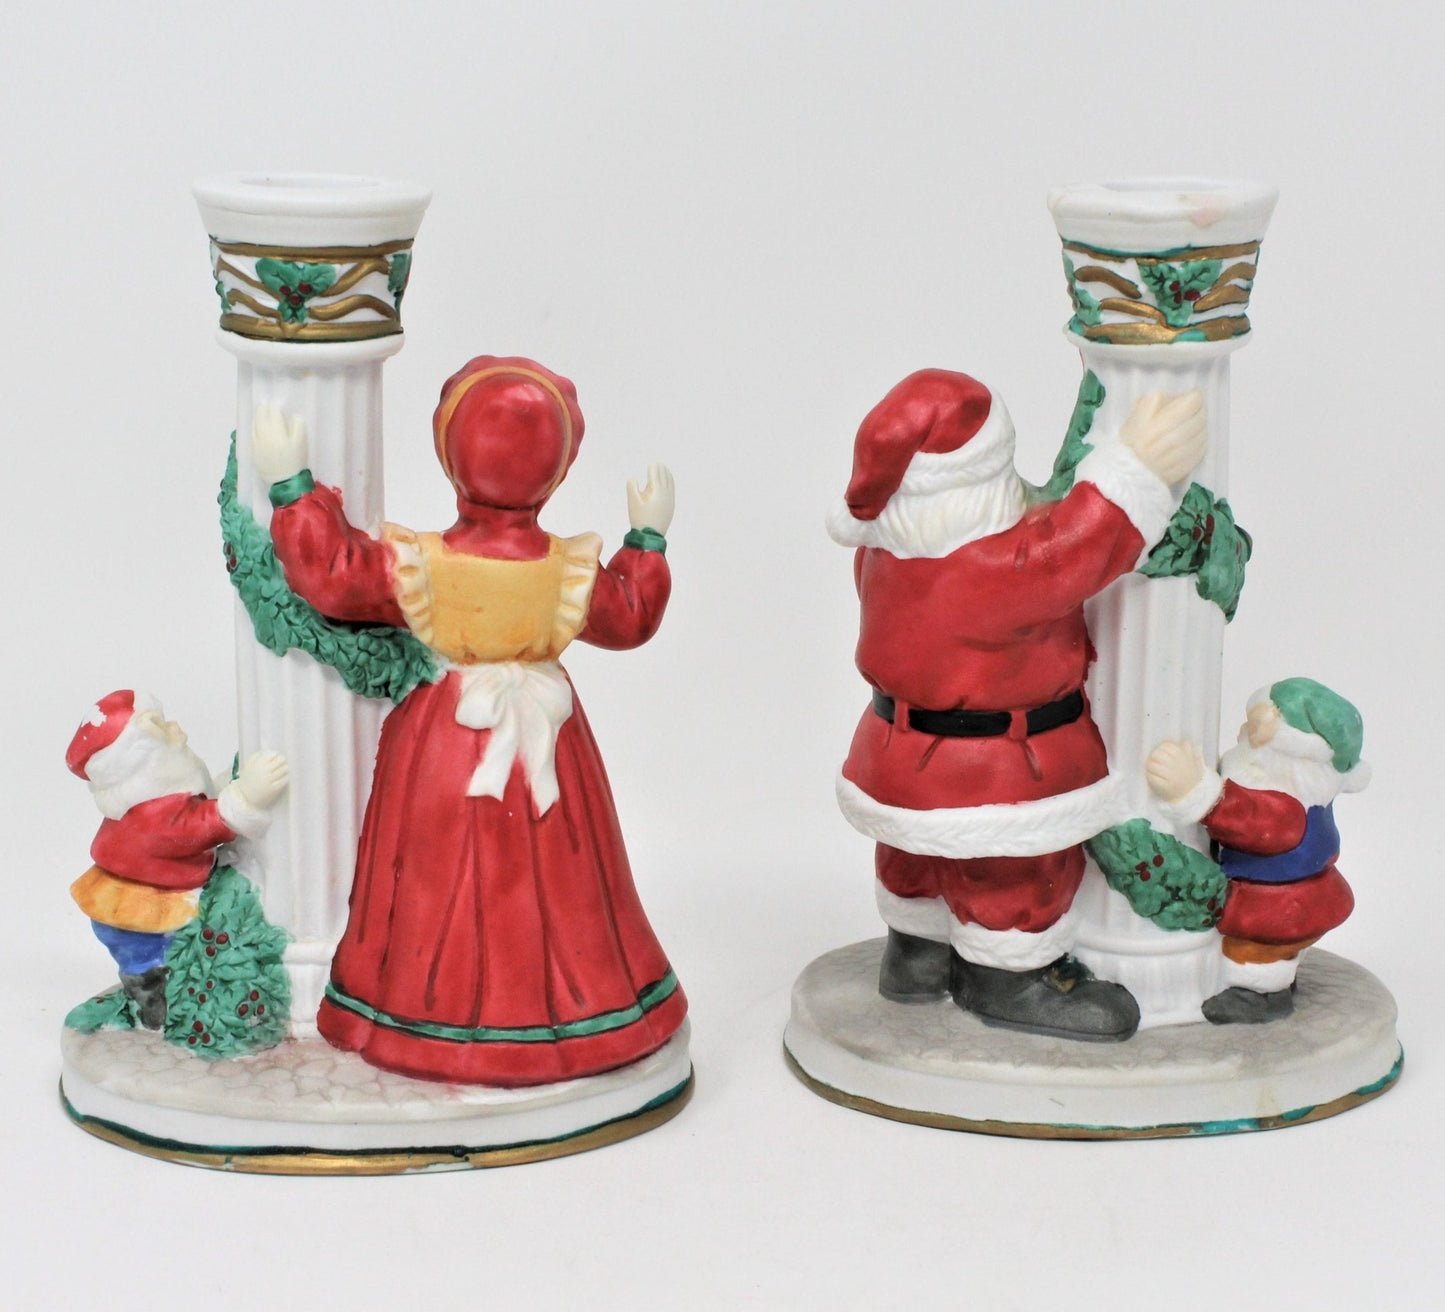 Candle Holders, Santa & Mrs. Claus with Elves, Porcelain, Vintage